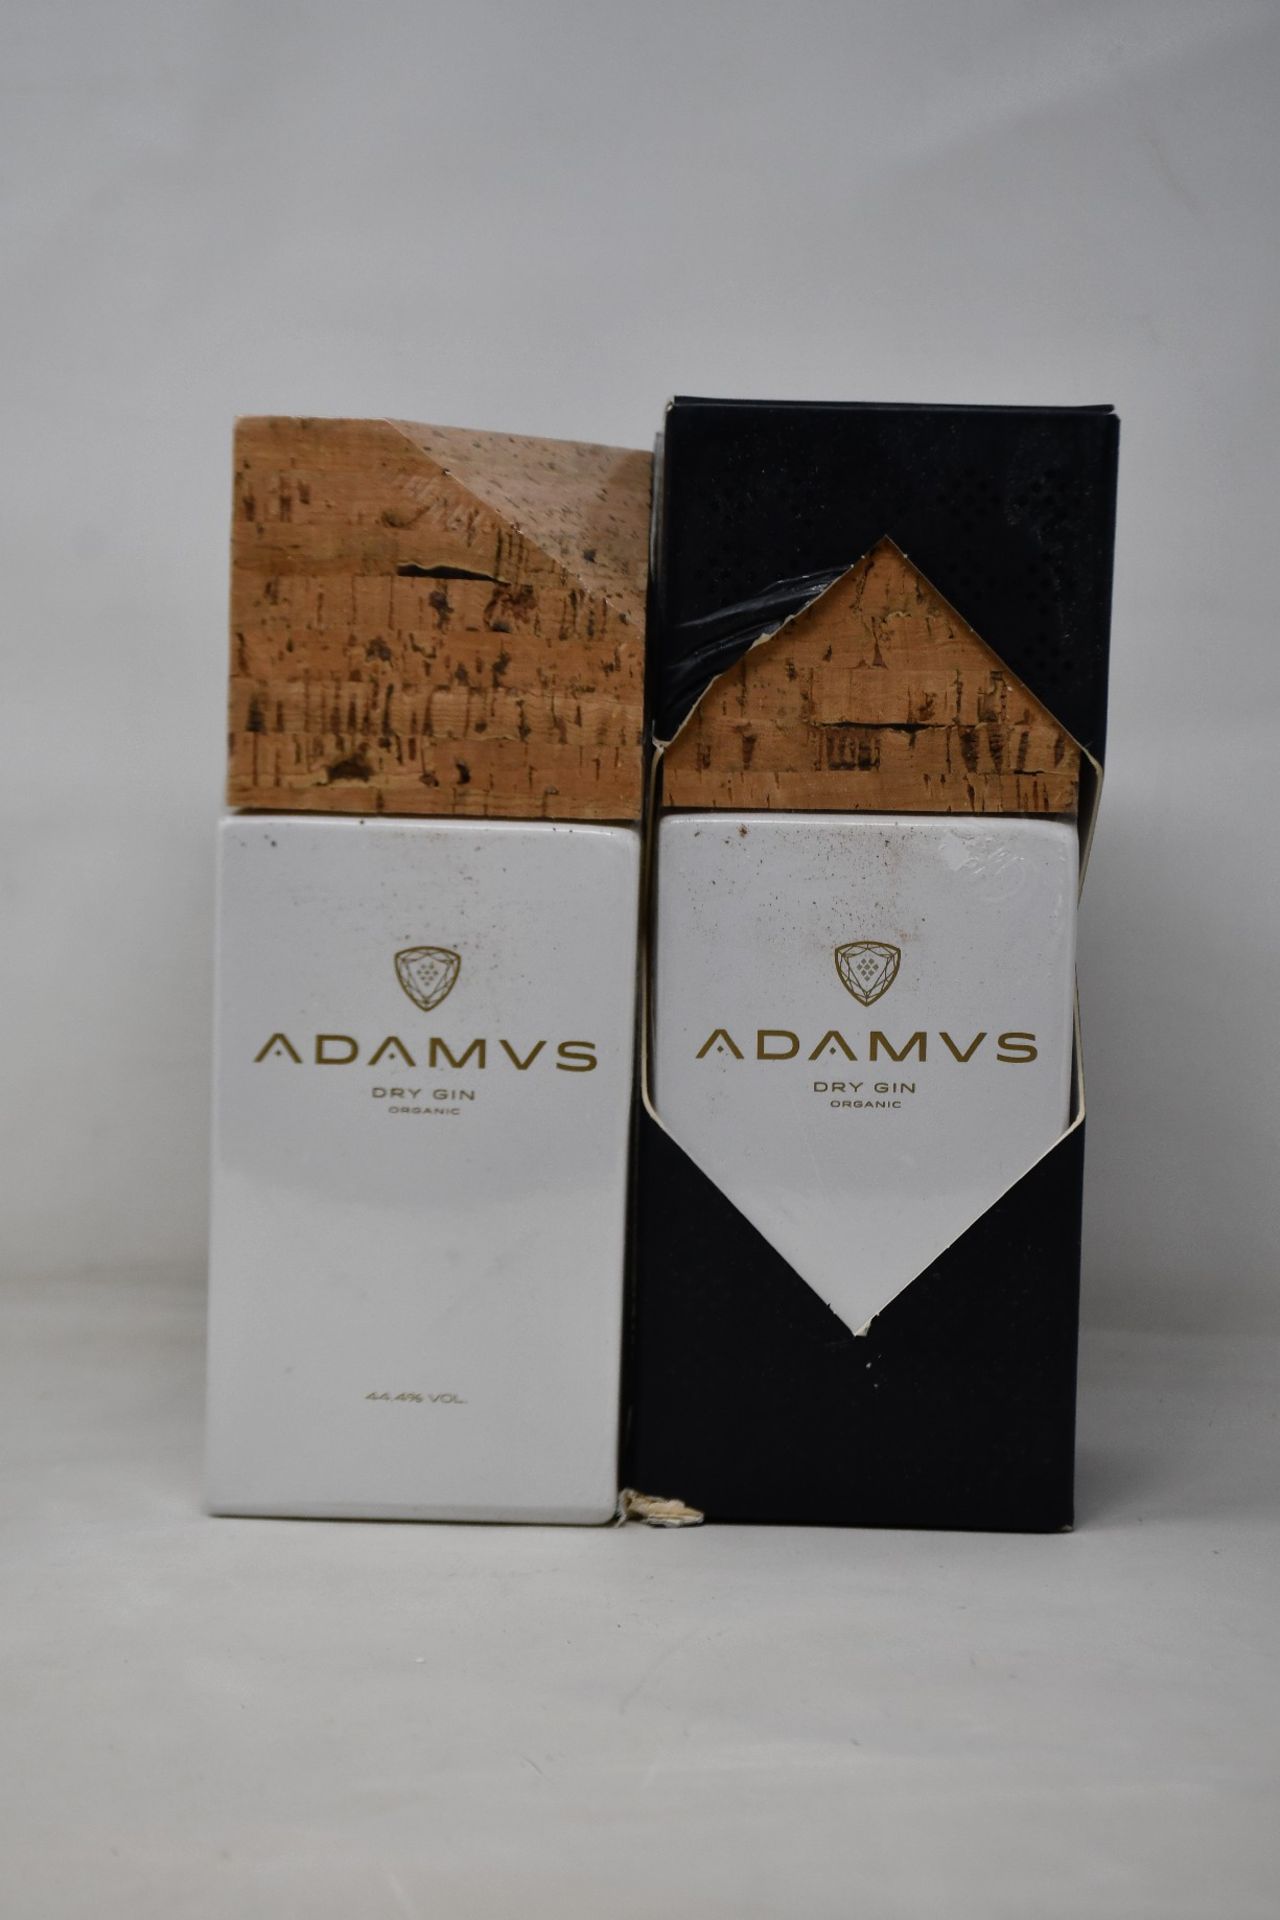 Three bottles of Adamus dry gin (700ml) (Over 18s only).